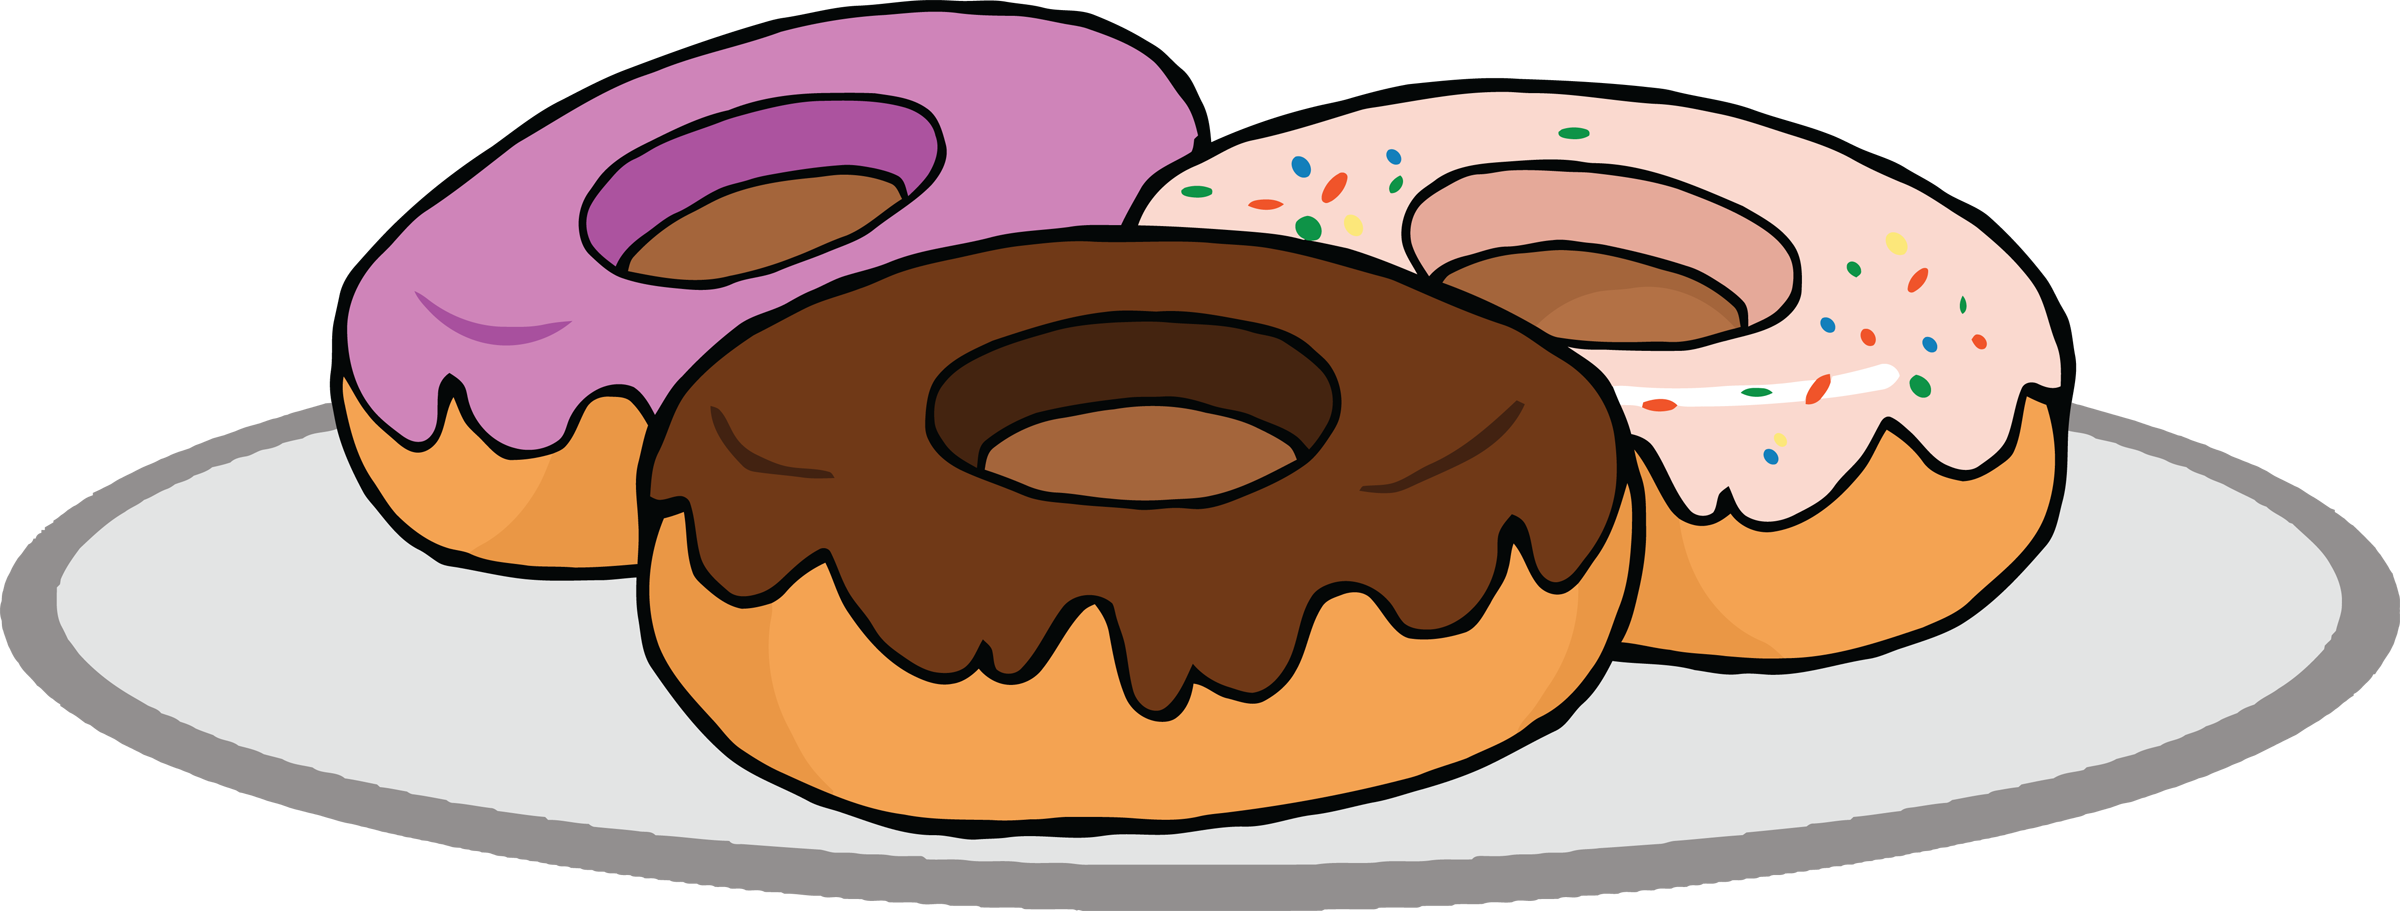 Kawaii Donuts Clipart / Cute